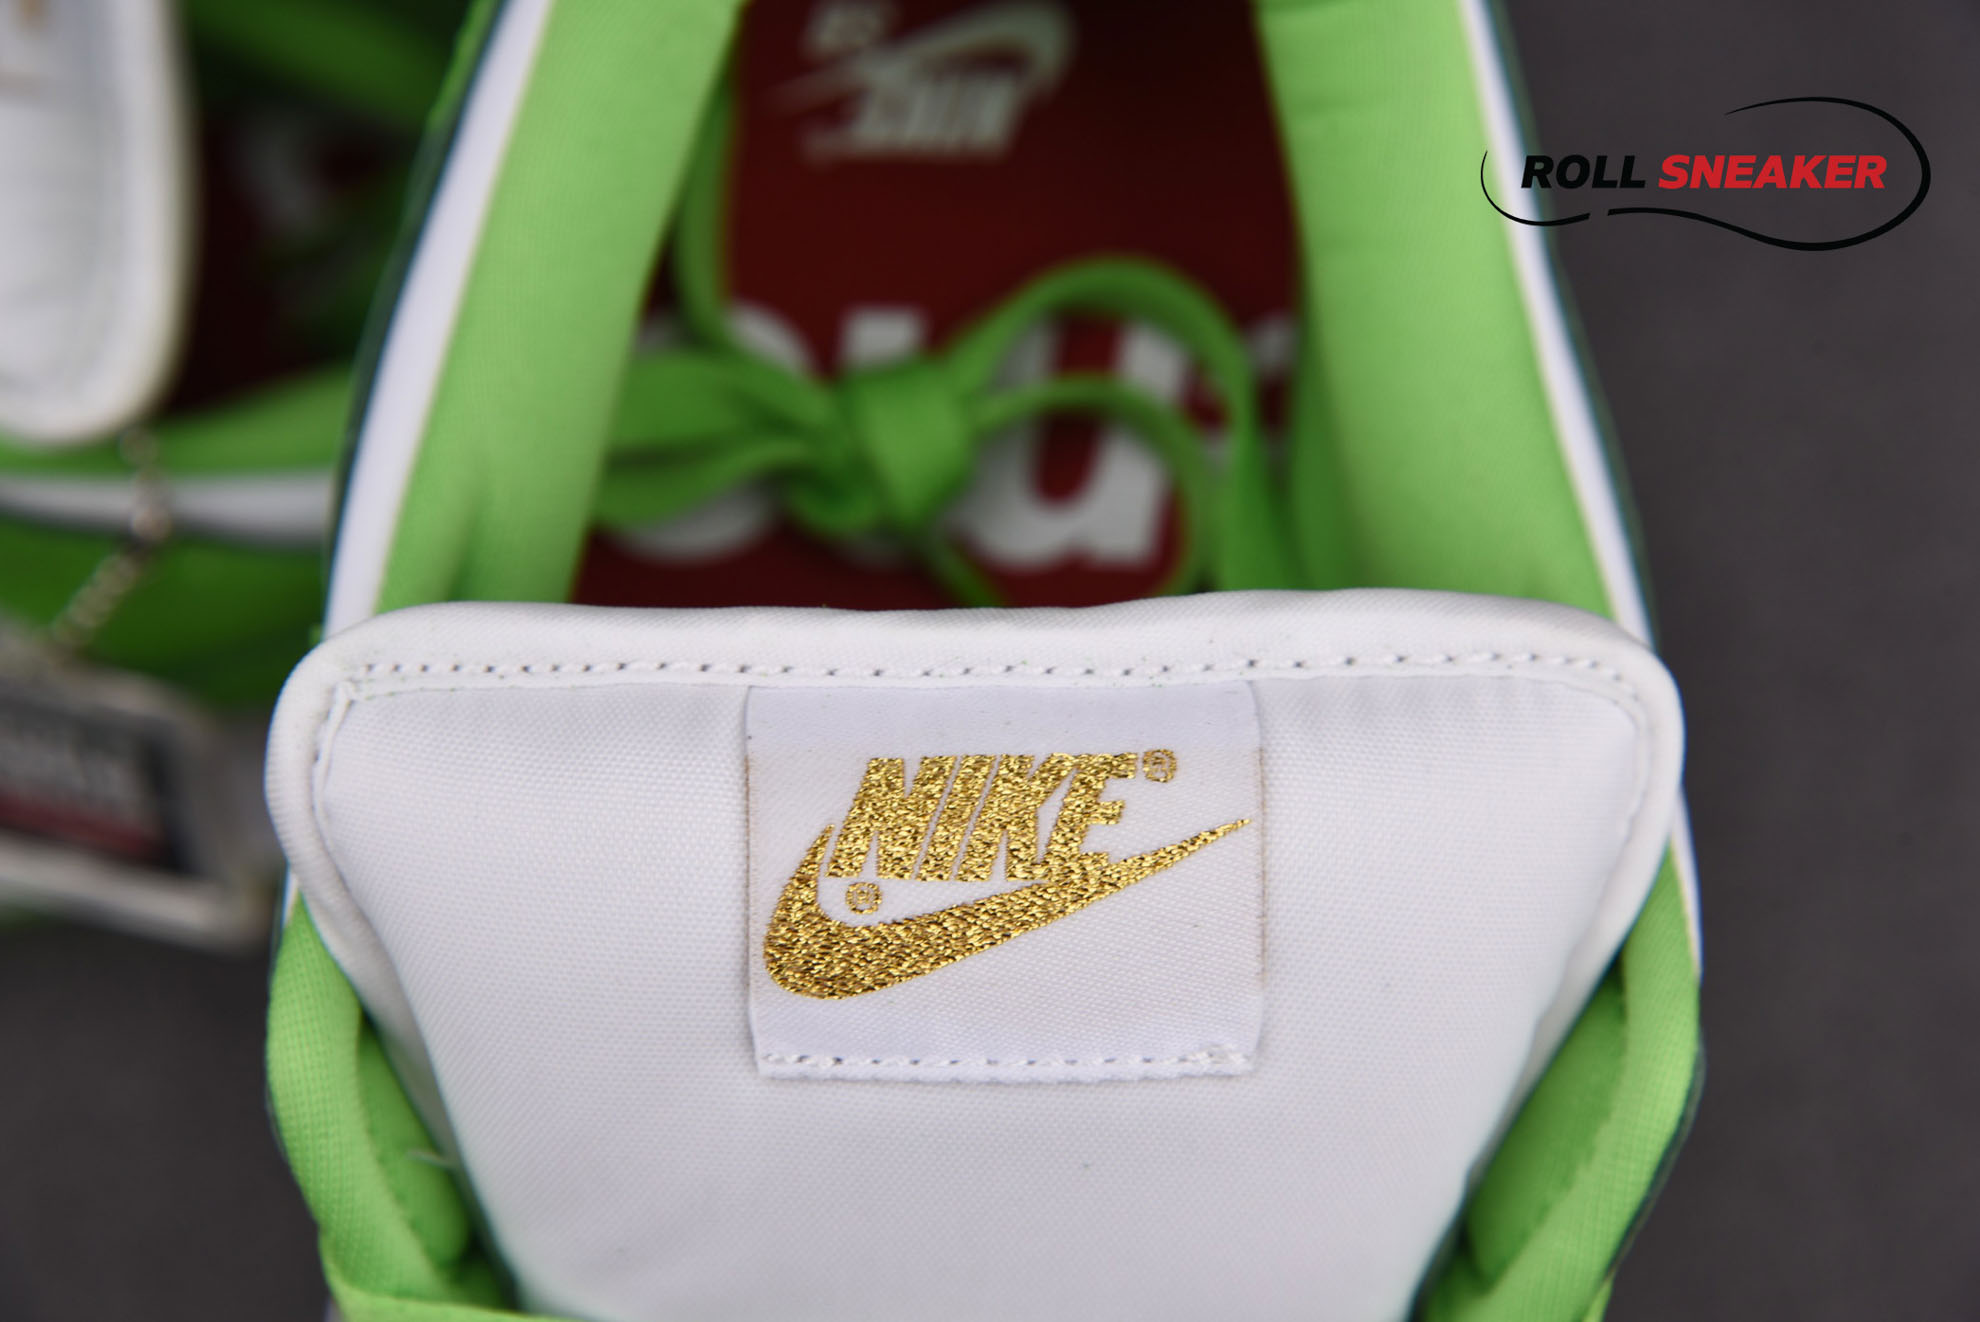 Nike Supreme x Dunk Low OG SB QS ‘Mean Green’